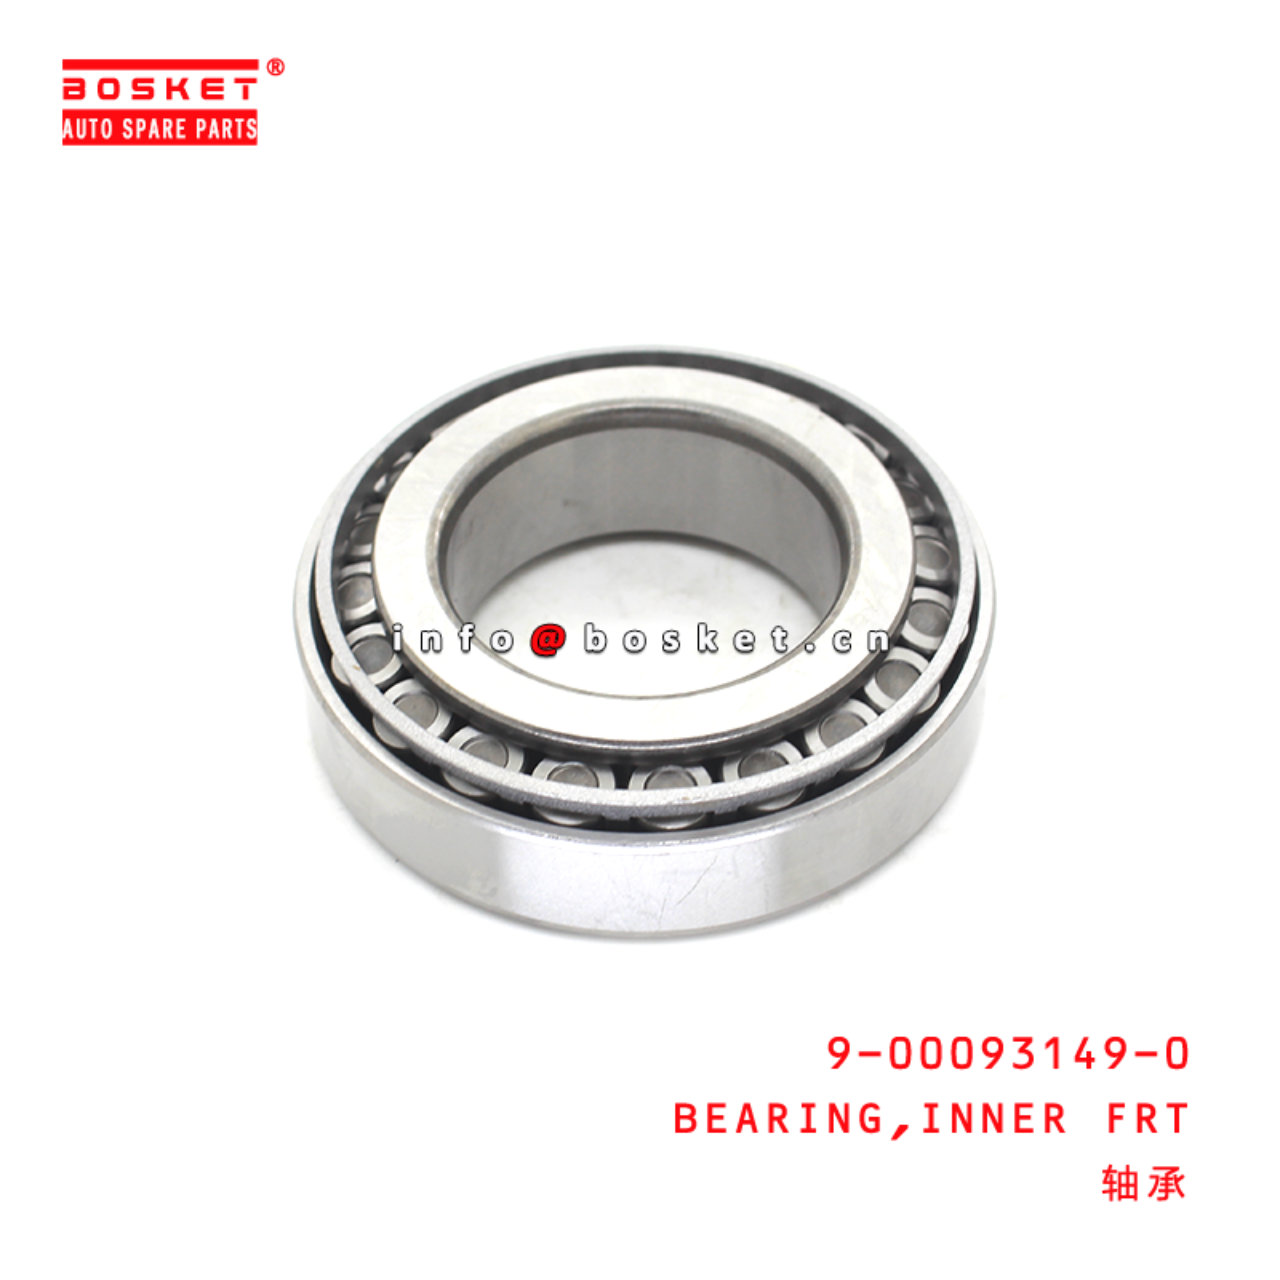 9-00093149-0 Front Inner Bearing Suitable for ISUZU HINO700